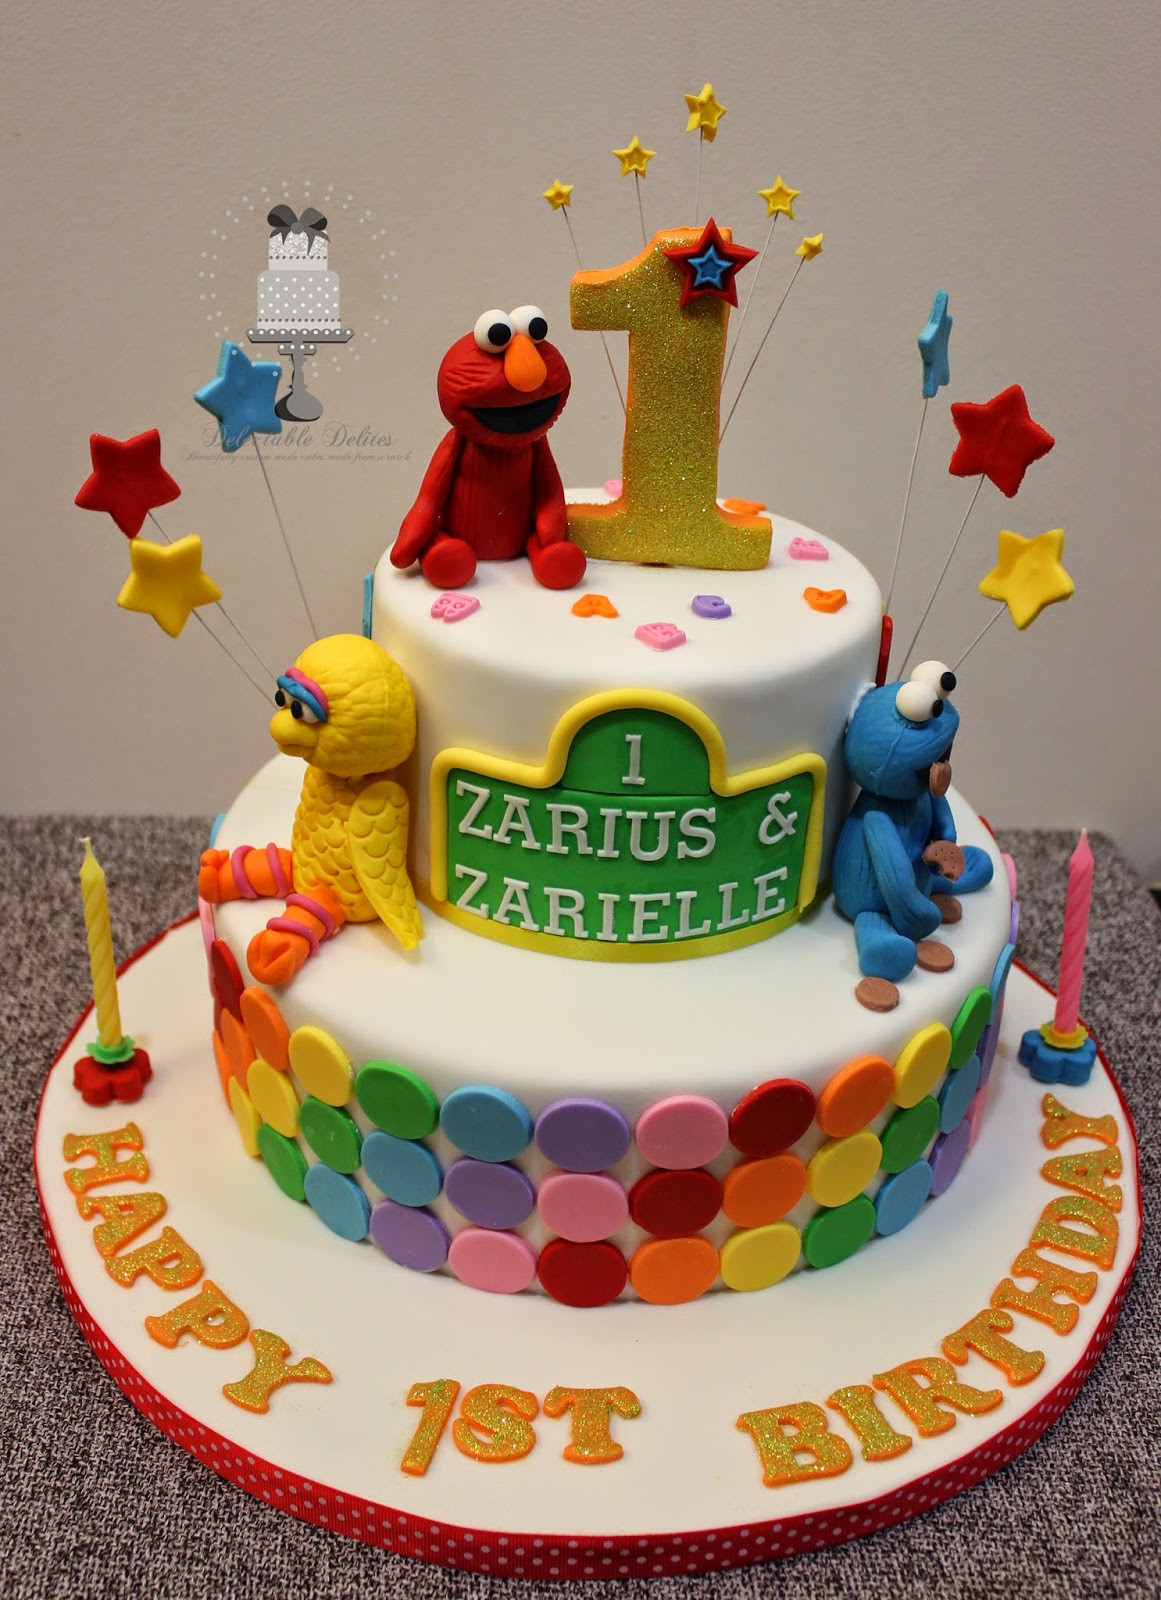 Elmo 1st Birthday Cake
 Delectable Delites Elmo and friends cake for Zarius